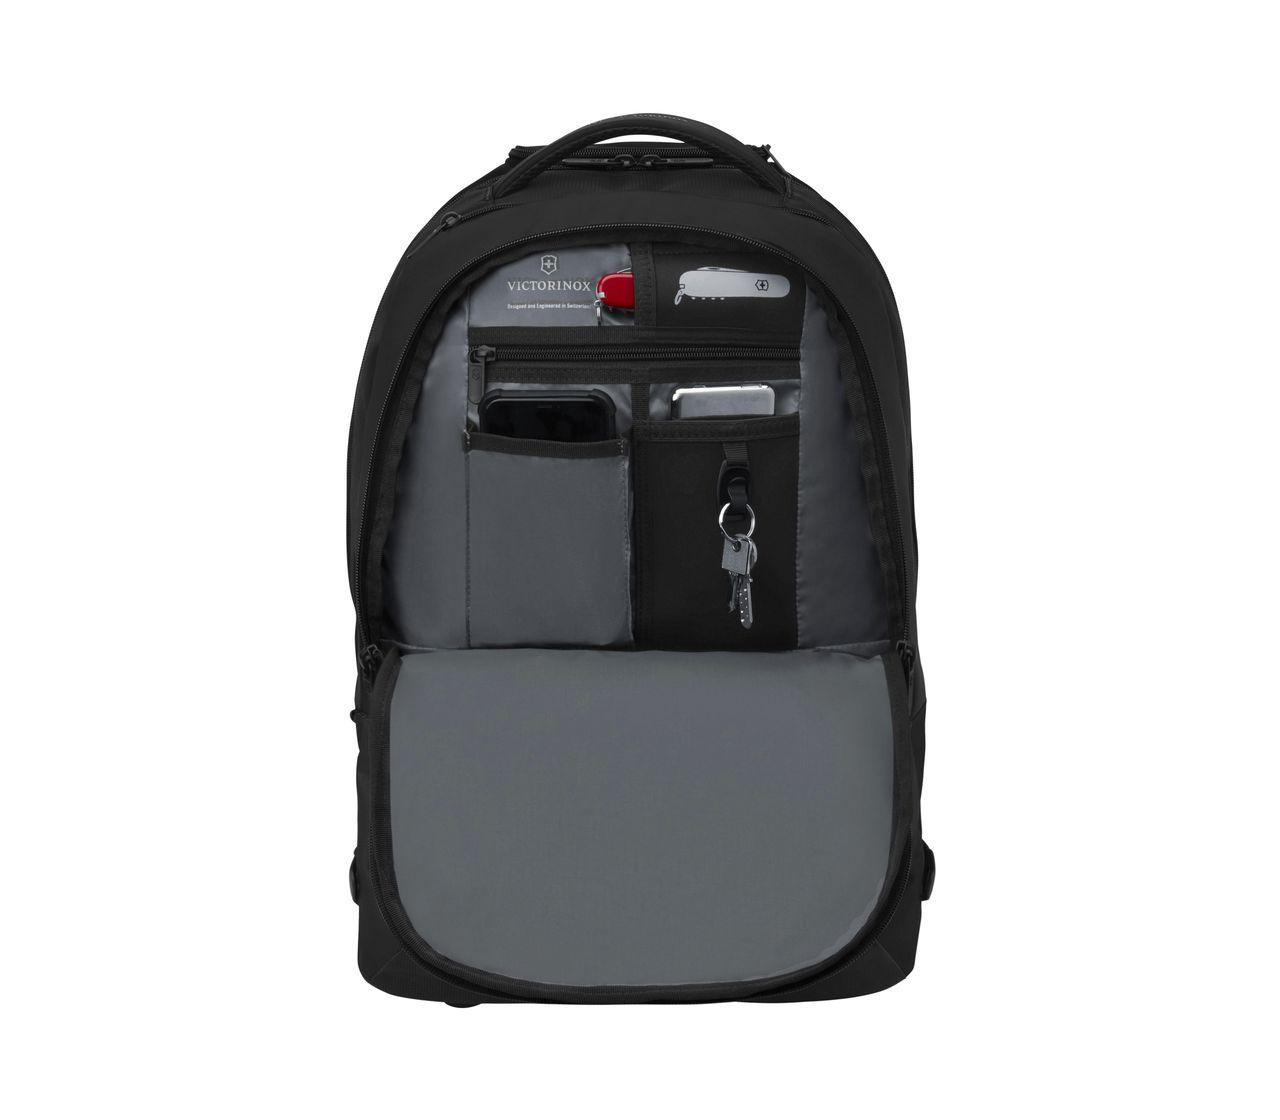 Victorinox VX Sport EVO Backpack on Wheels in black - 611425